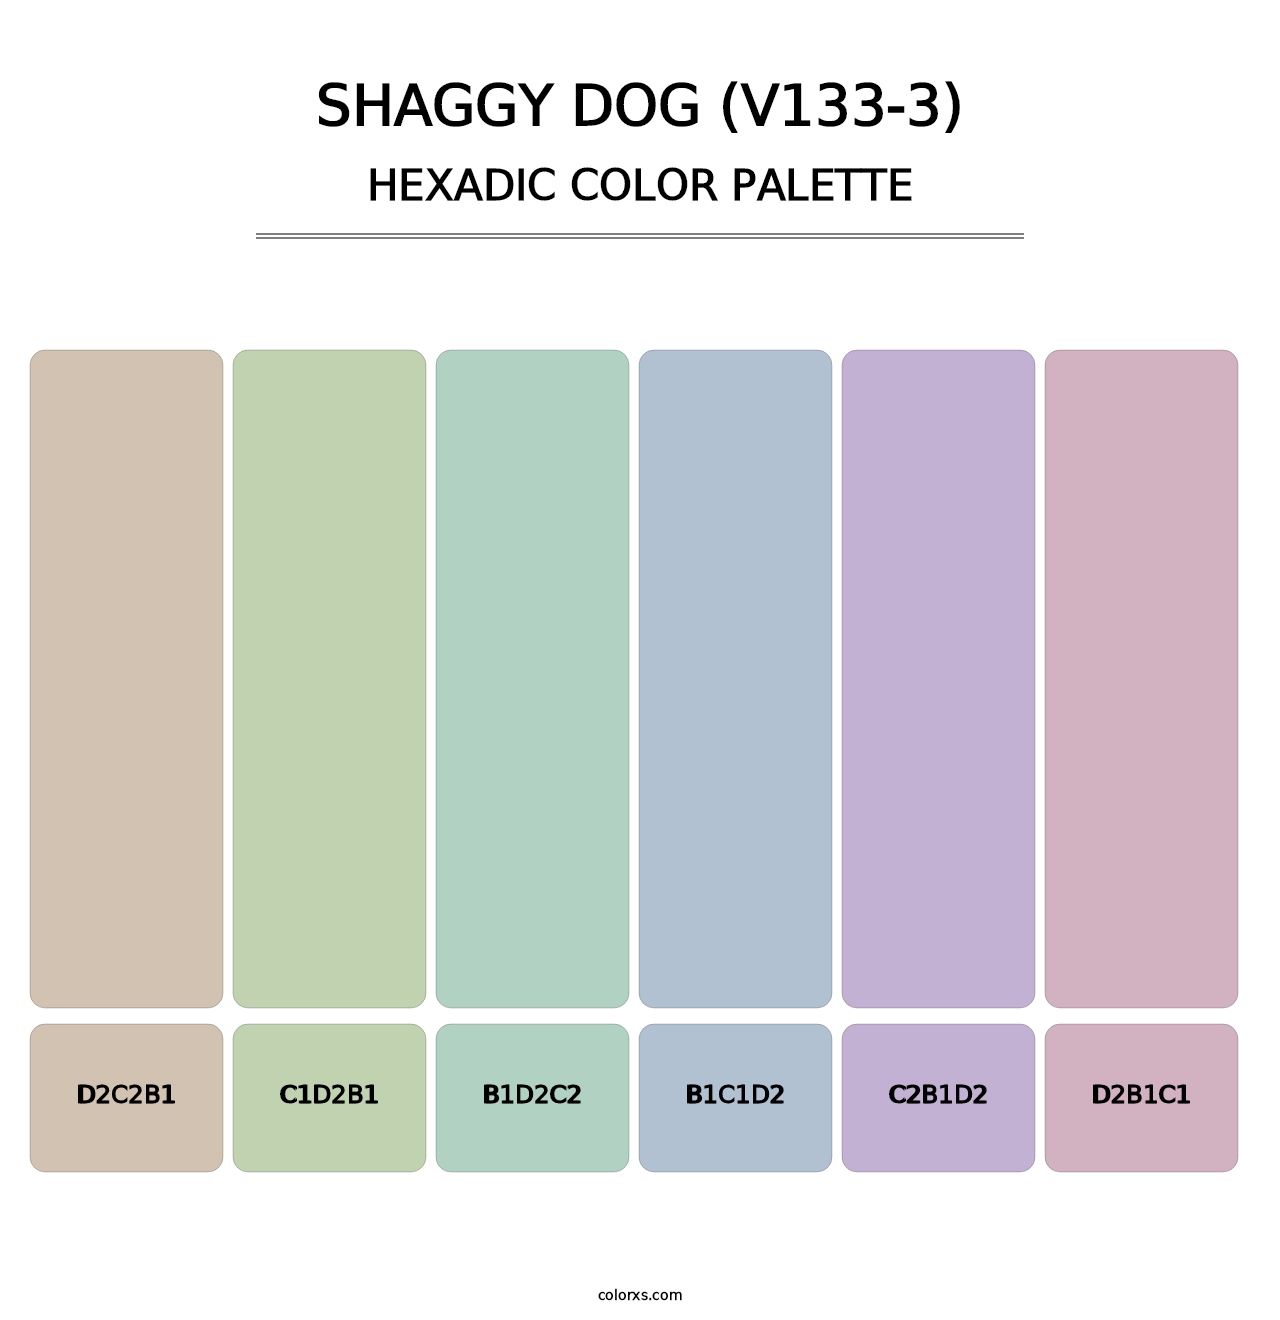 Shaggy Dog (V133-3) - Hexadic Color Palette